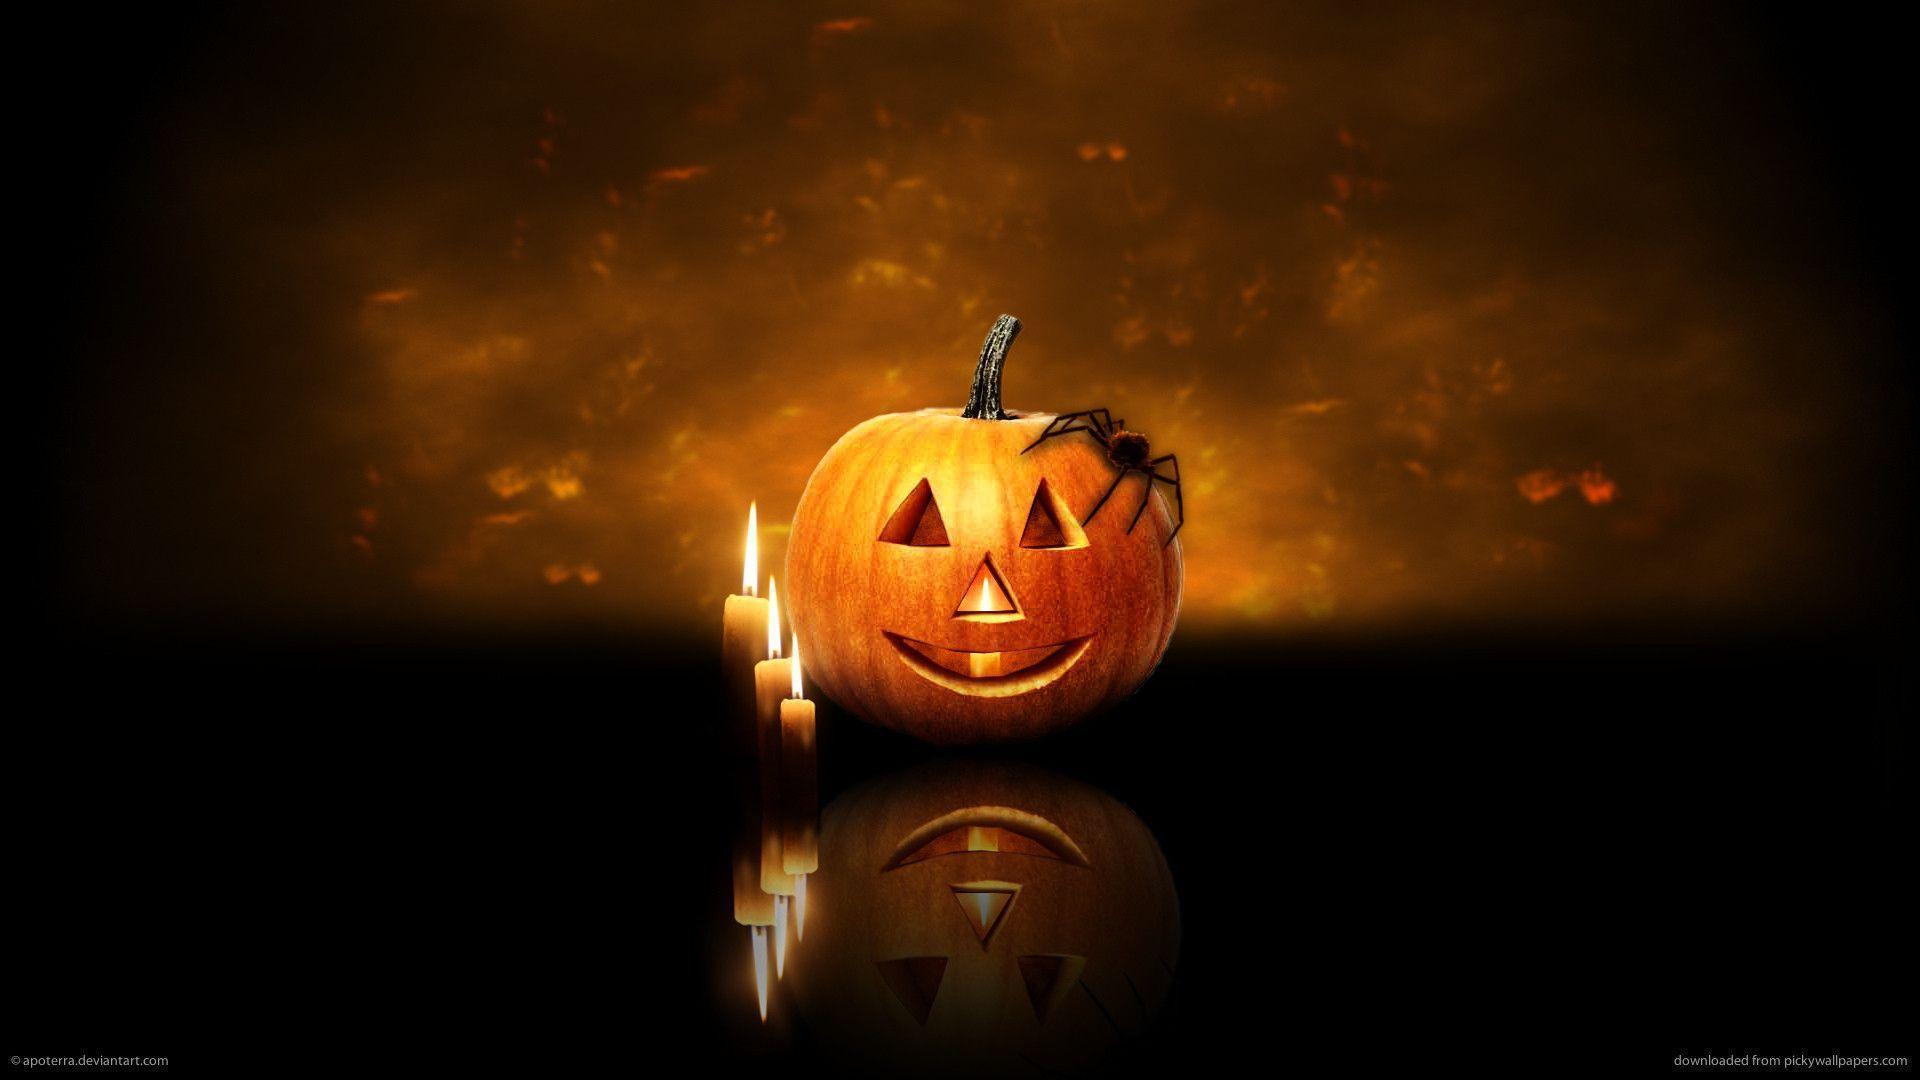 Download 1920x1080 Halloween Pumpkin And Candles Wallpaper